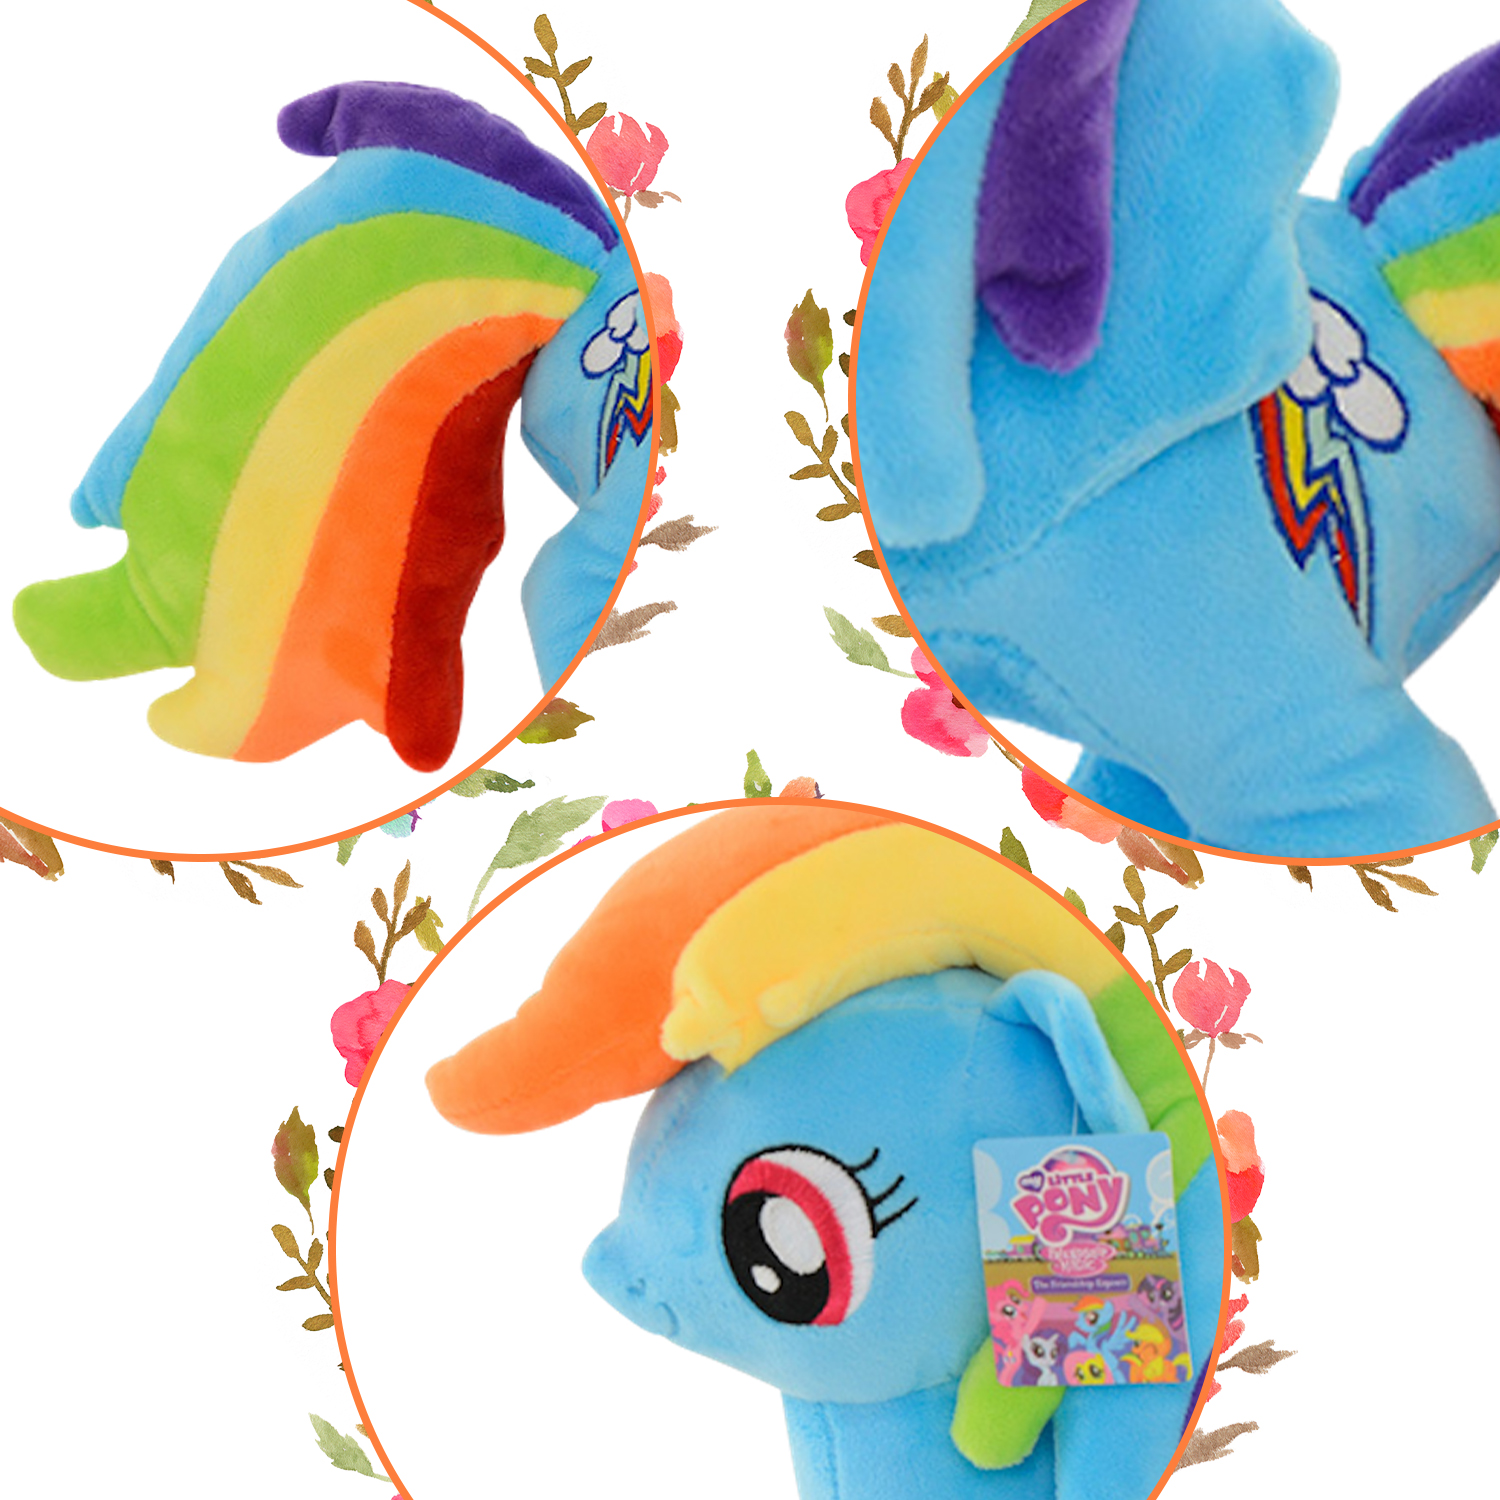 my little pony toy rainbow dash